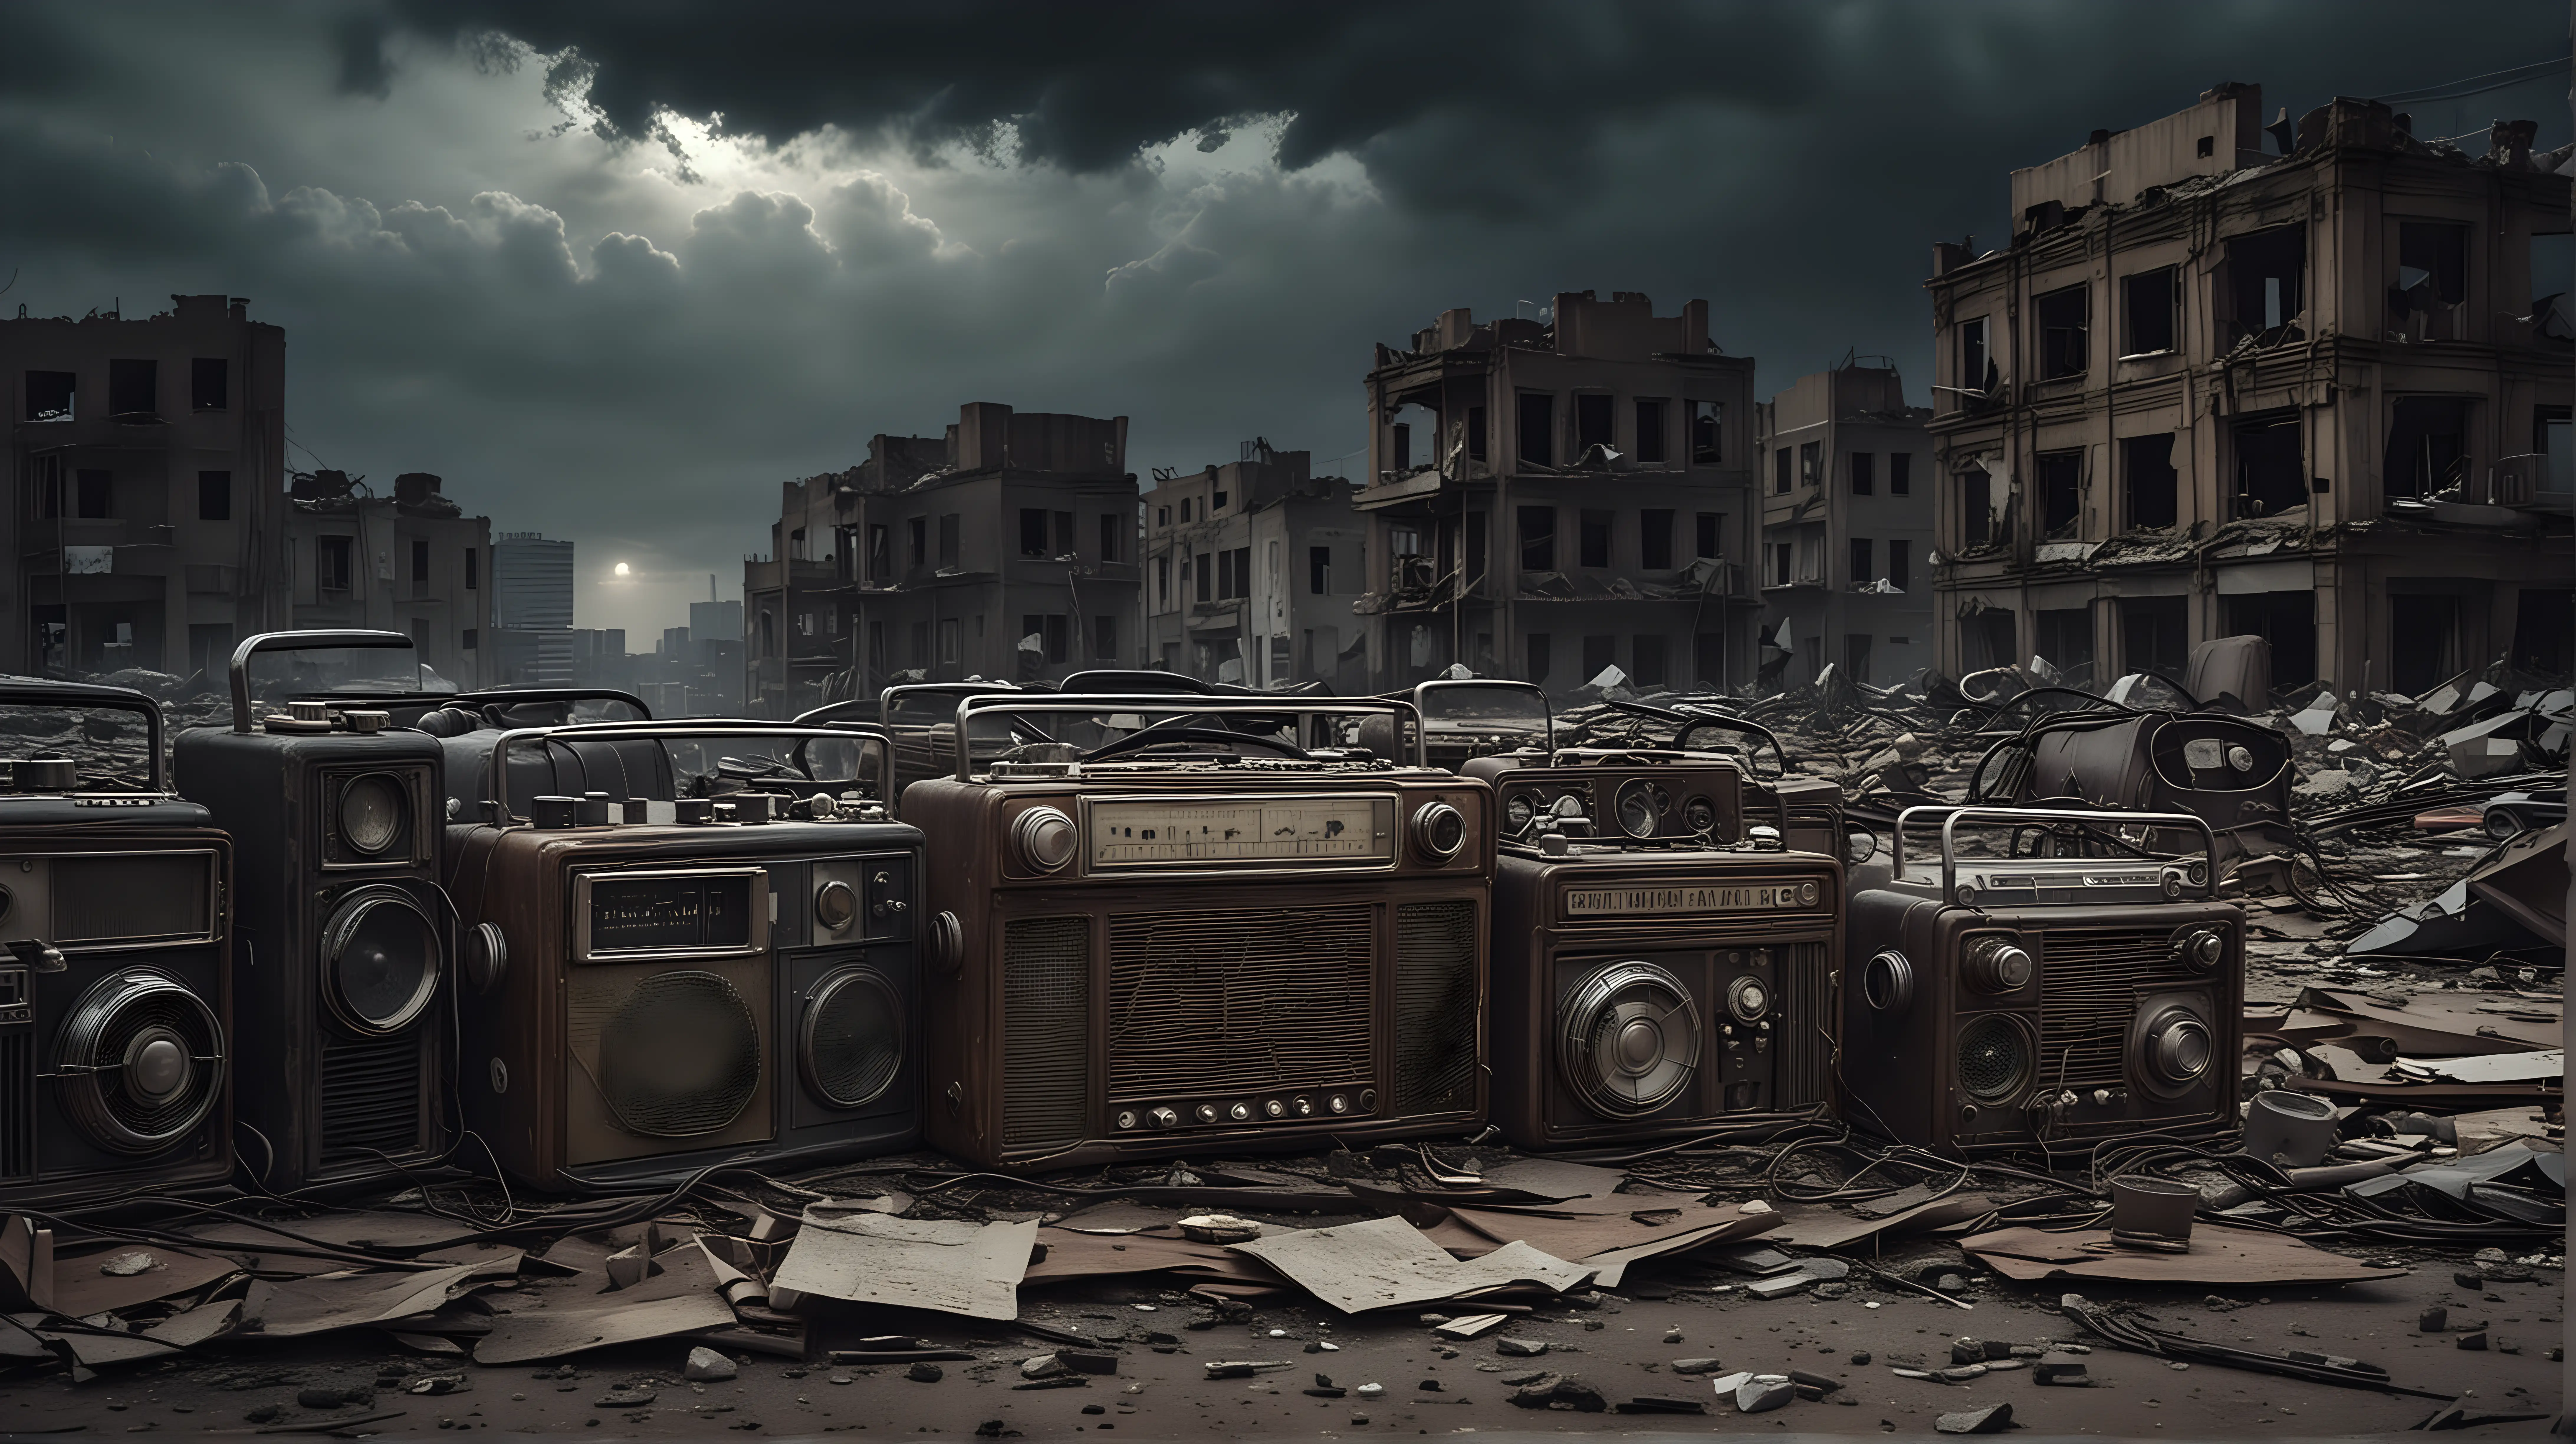 Eerie Night Scene Vintage Radios Amidst Nuclear City Ruins